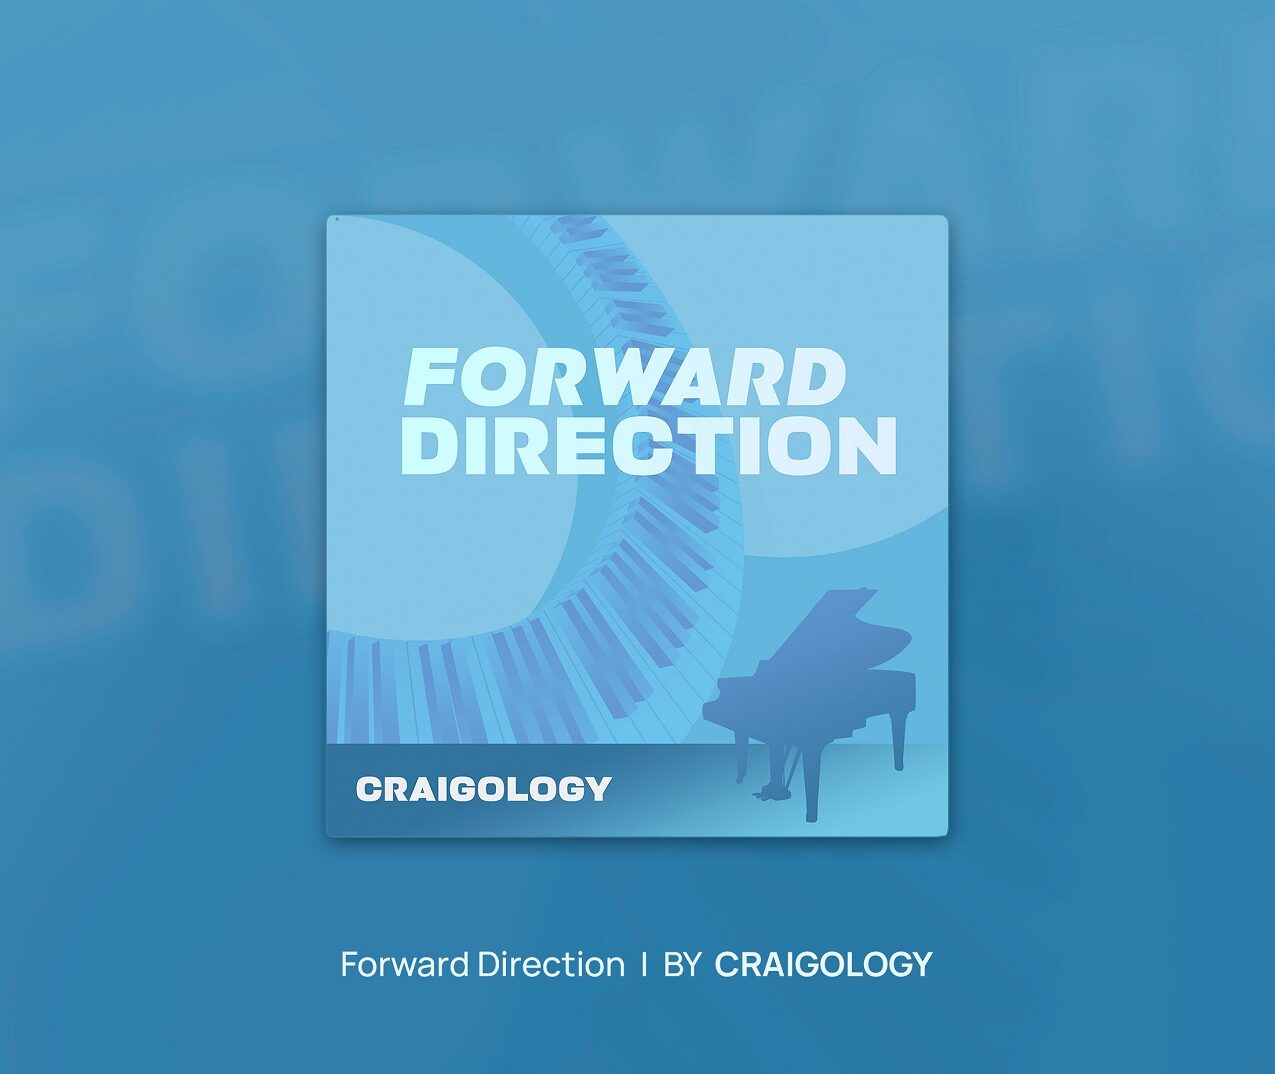 Craigology – Forward direction – now streaming